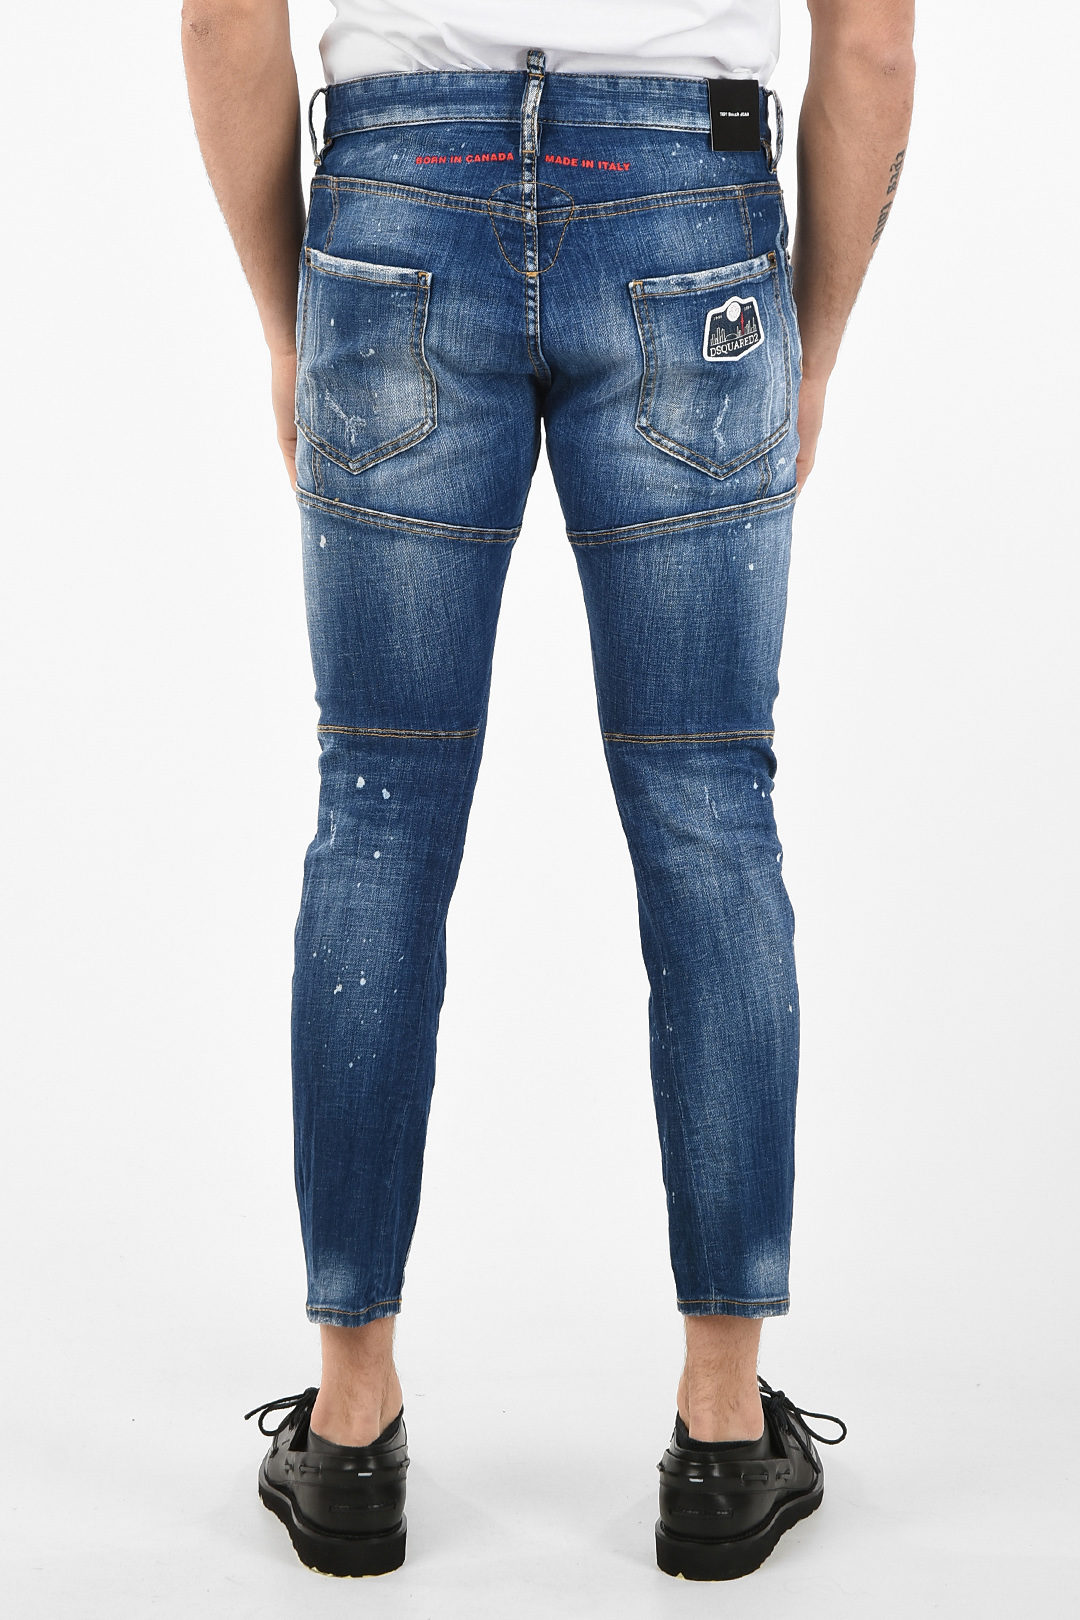 Dsquared2 15cm Printed Capri TIDY BIKER Jeans herren - Glamood Outlet